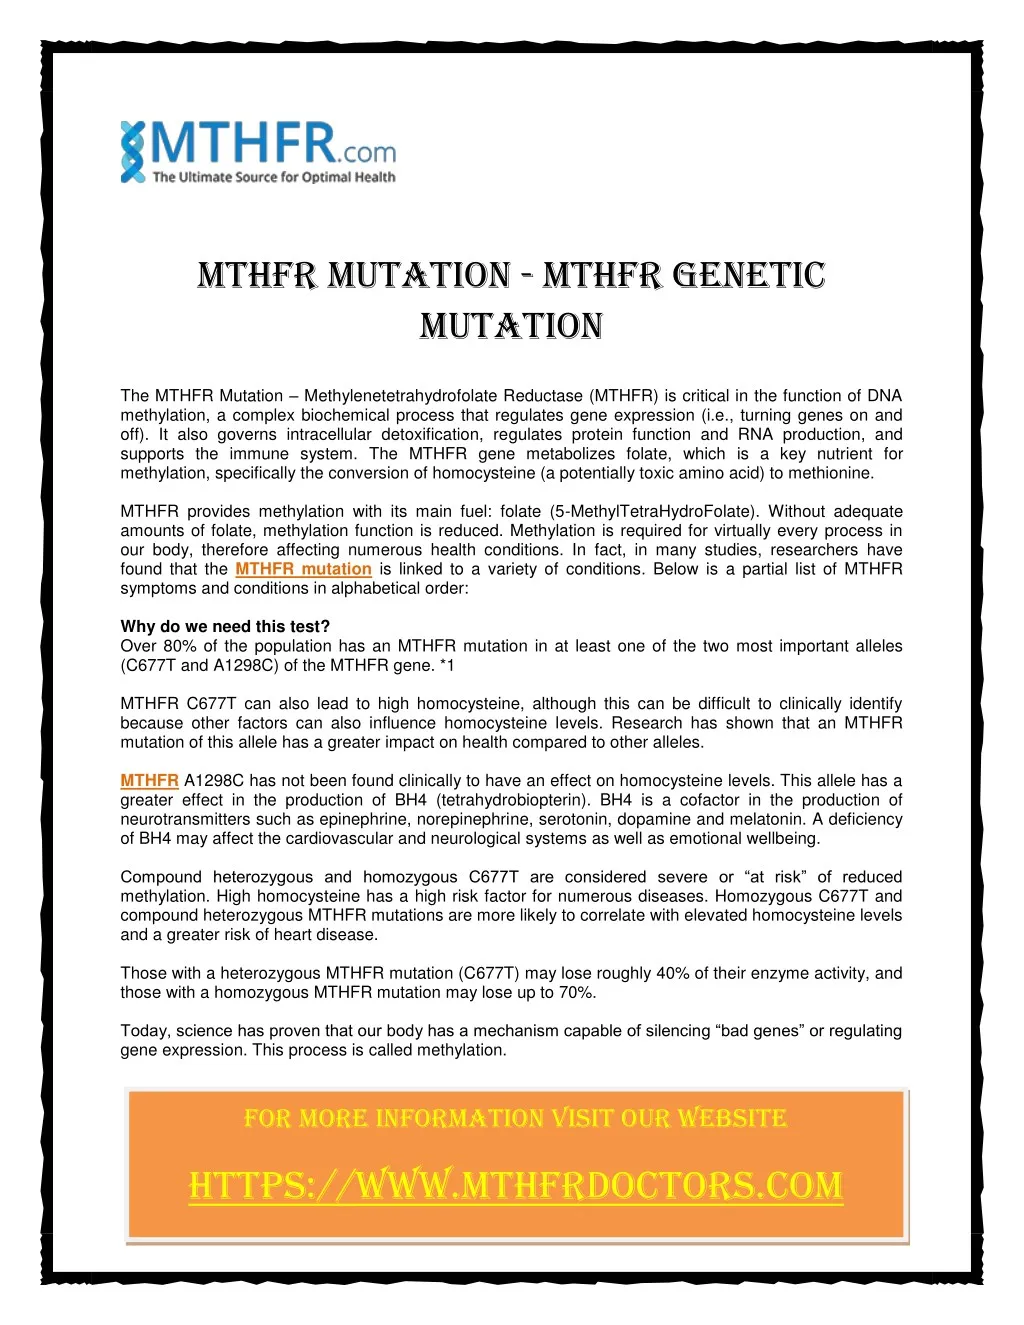 mthfr mutation mthfr genetic mutation